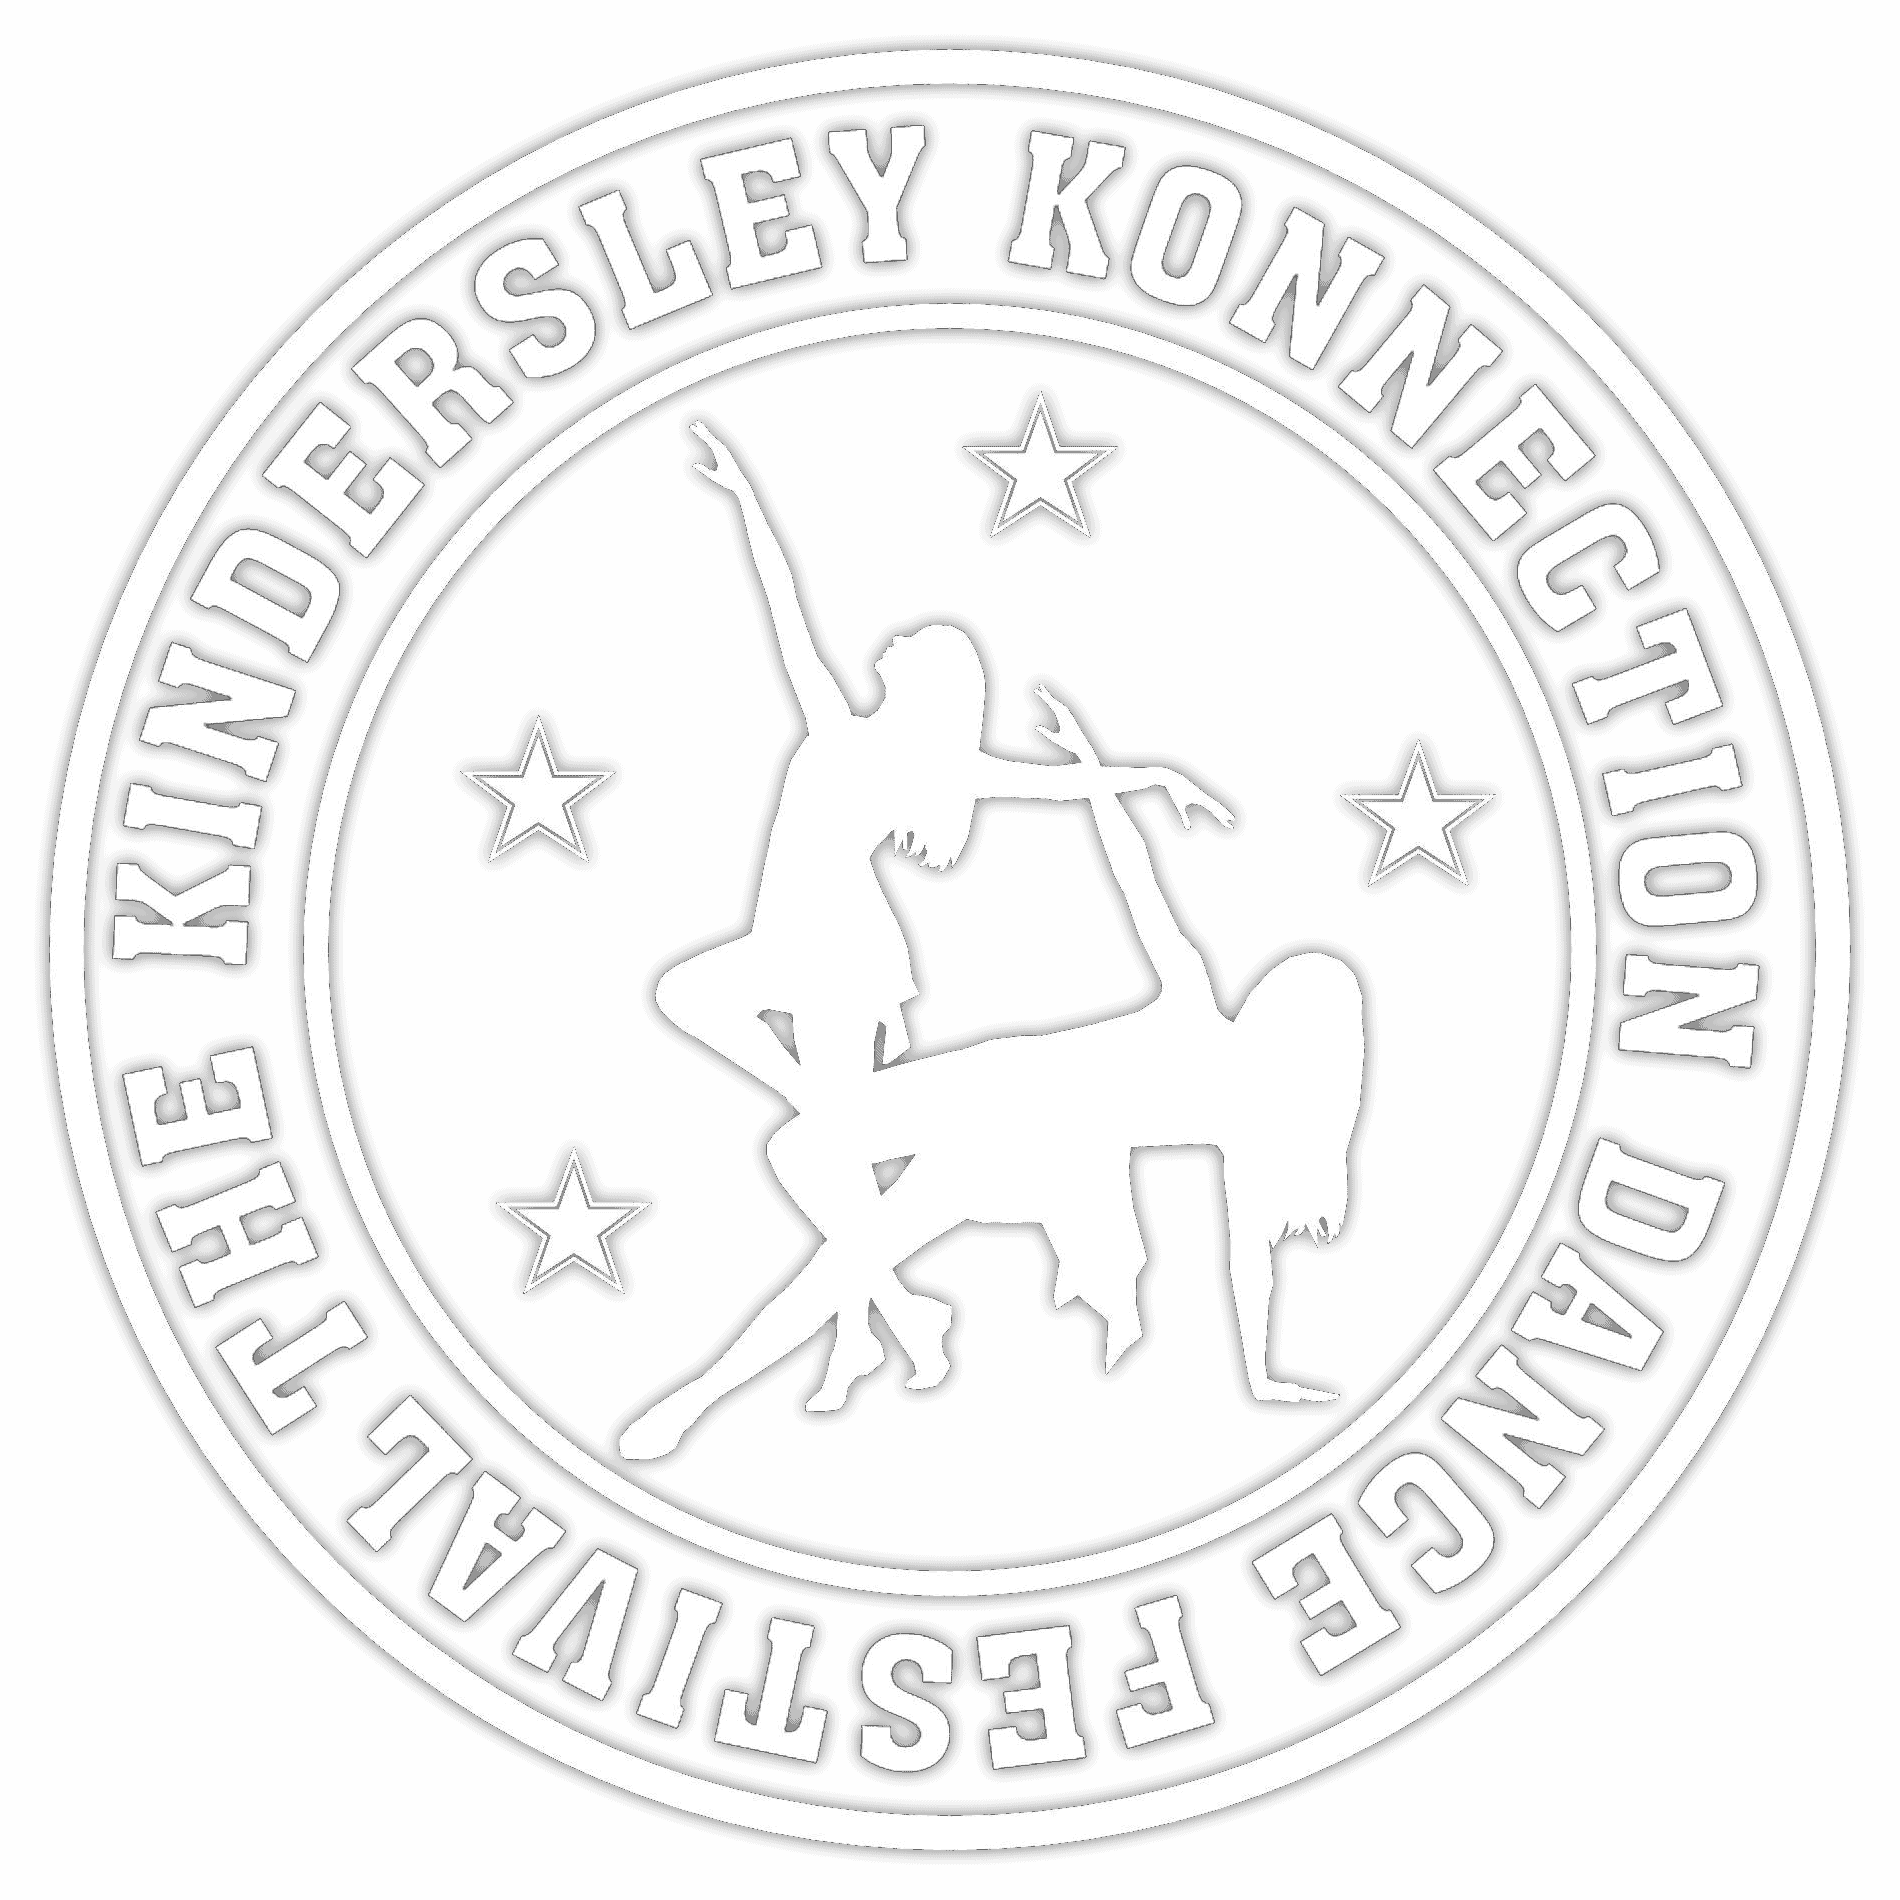 Logo - Kindersley Konnection Dance Festival